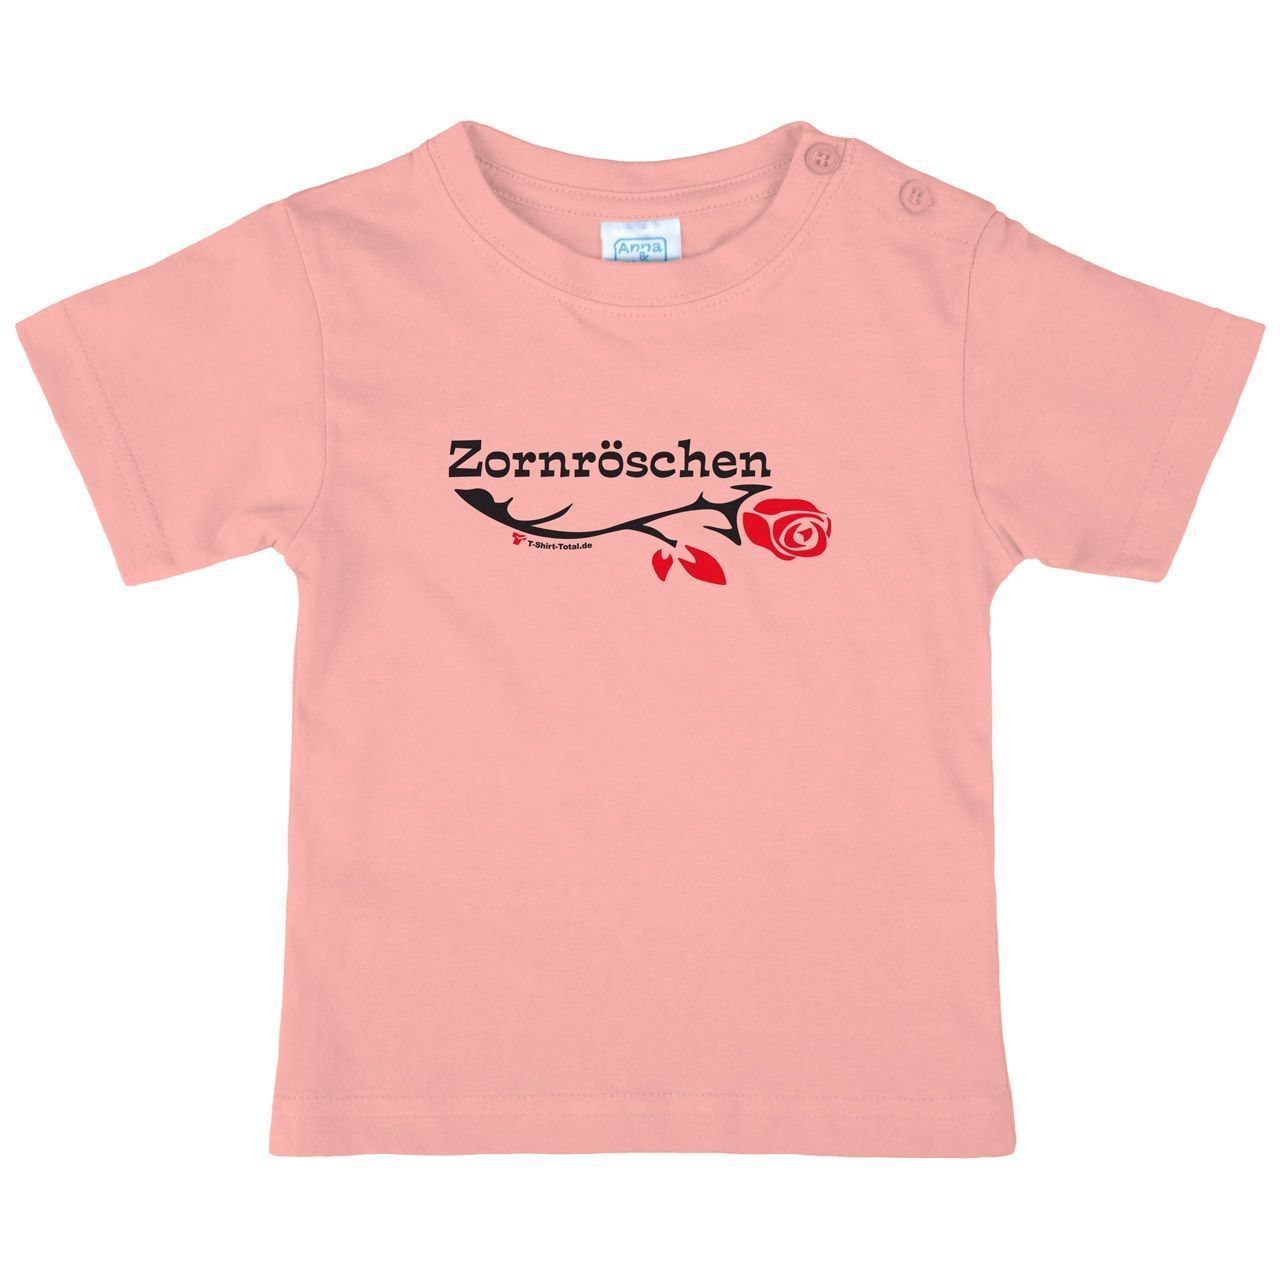 Zornröschen Kinder T-Shirt rosa 80 / 86